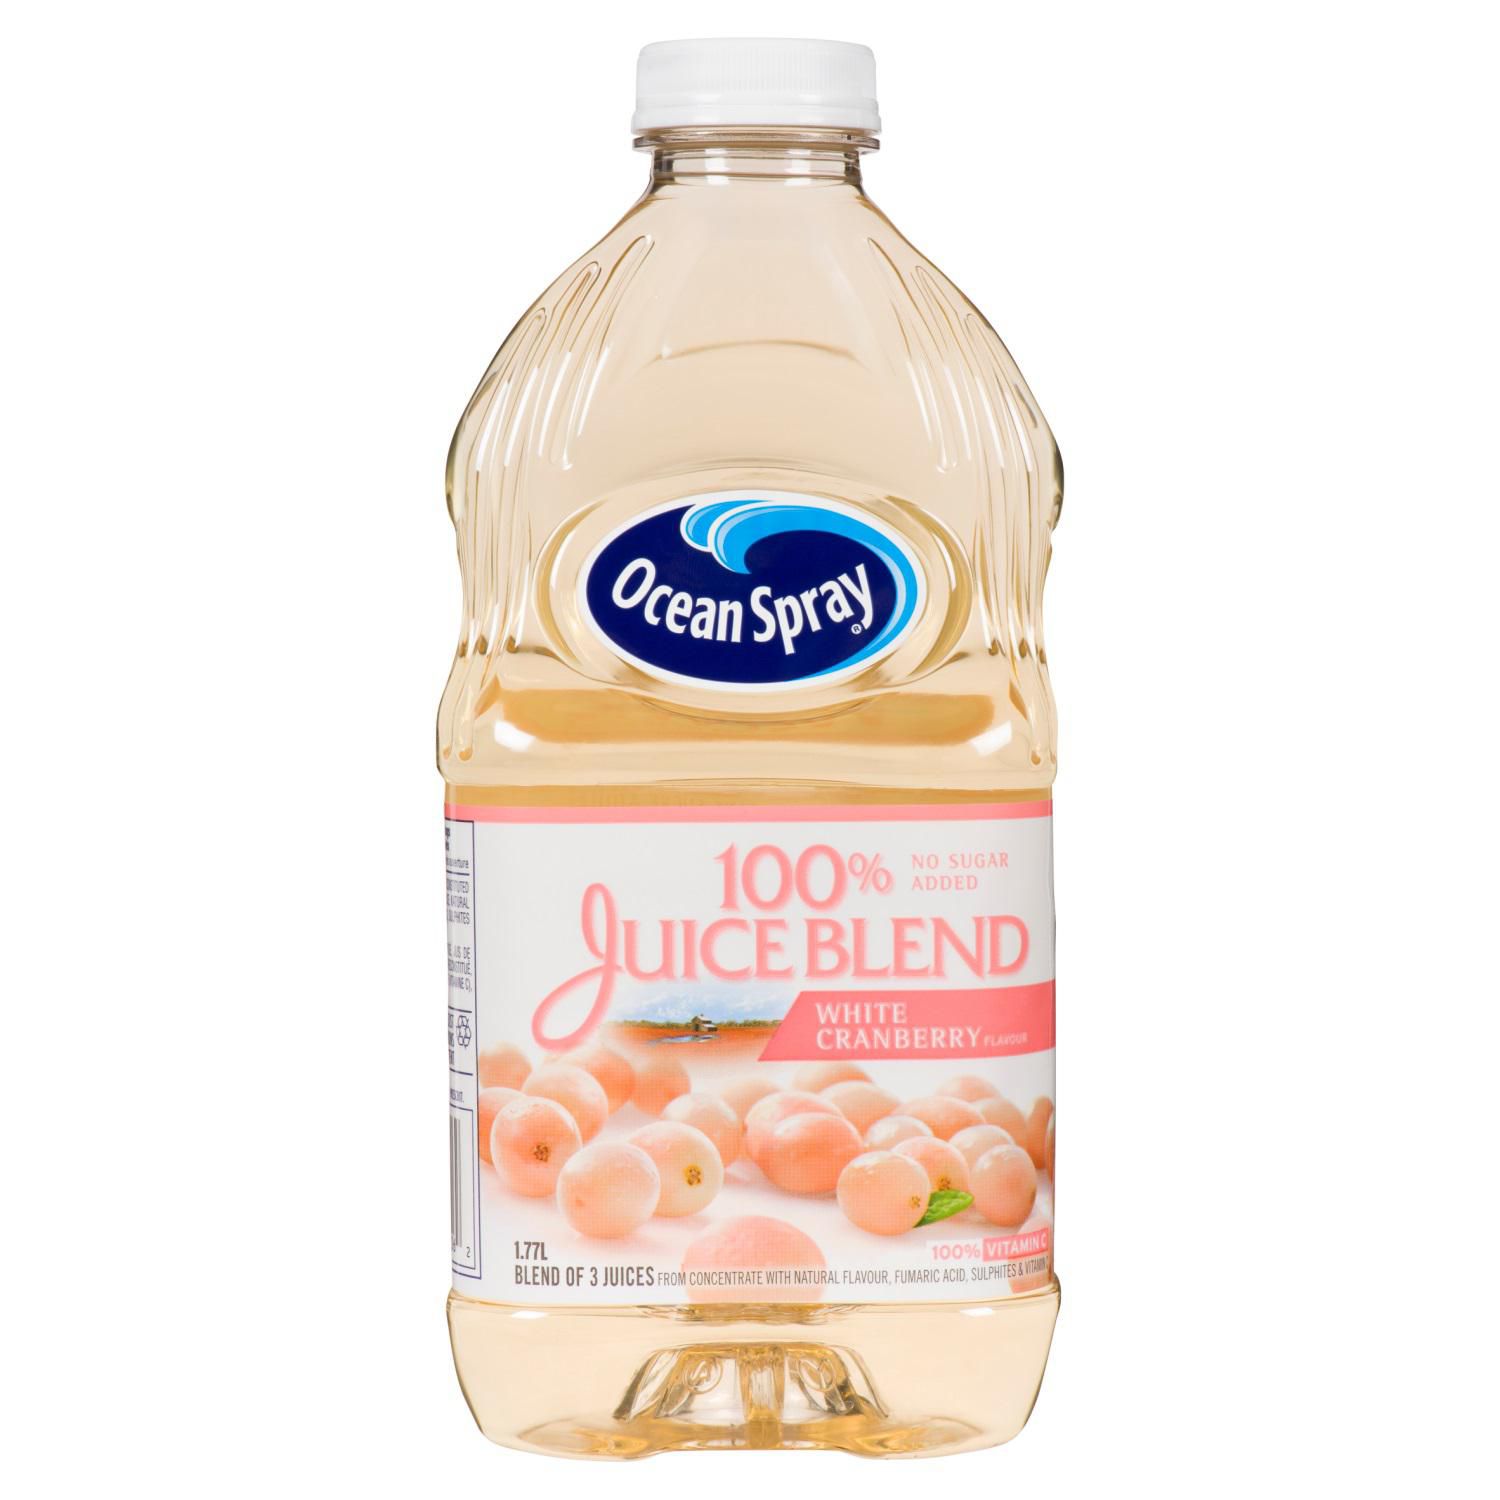 Ocean Spray 100 Juice Blend White Cranberry Walmart Canada